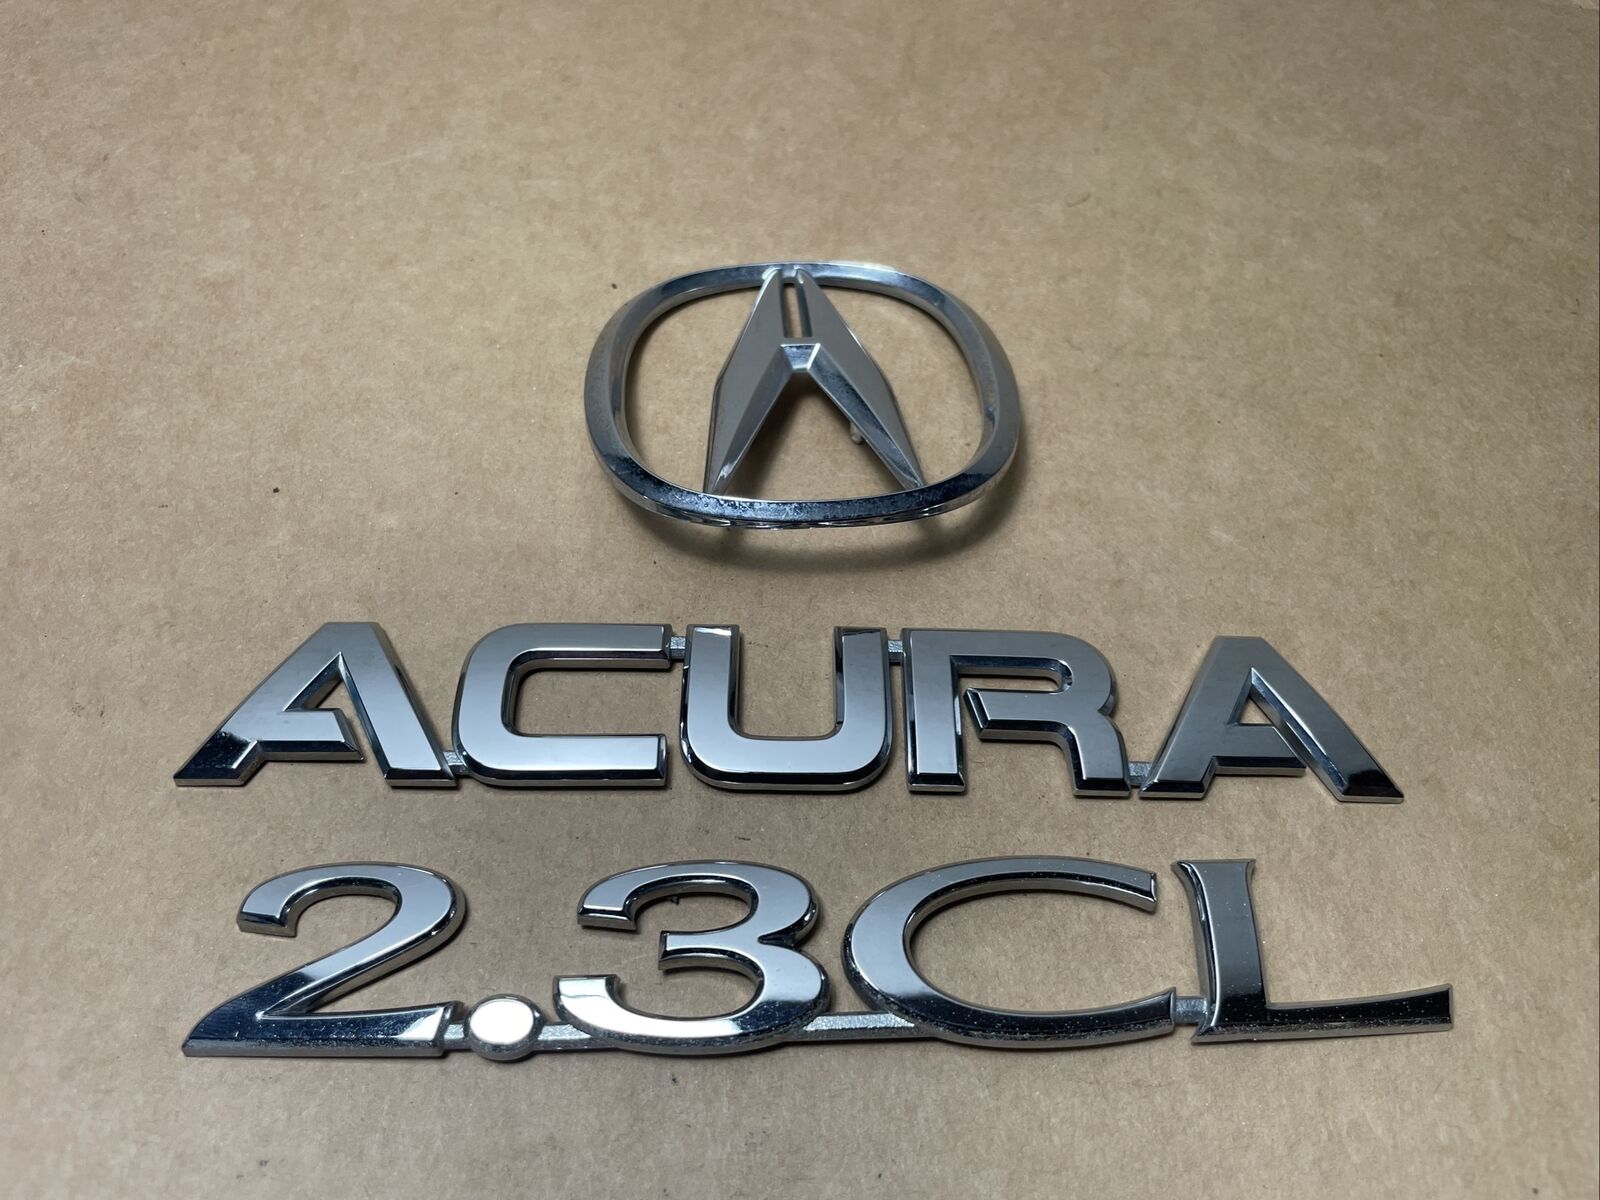 FREE SHIPPING OEM Acura 2.3CL CL 1997 1998 1999  Rear Emblem Badge  set lot